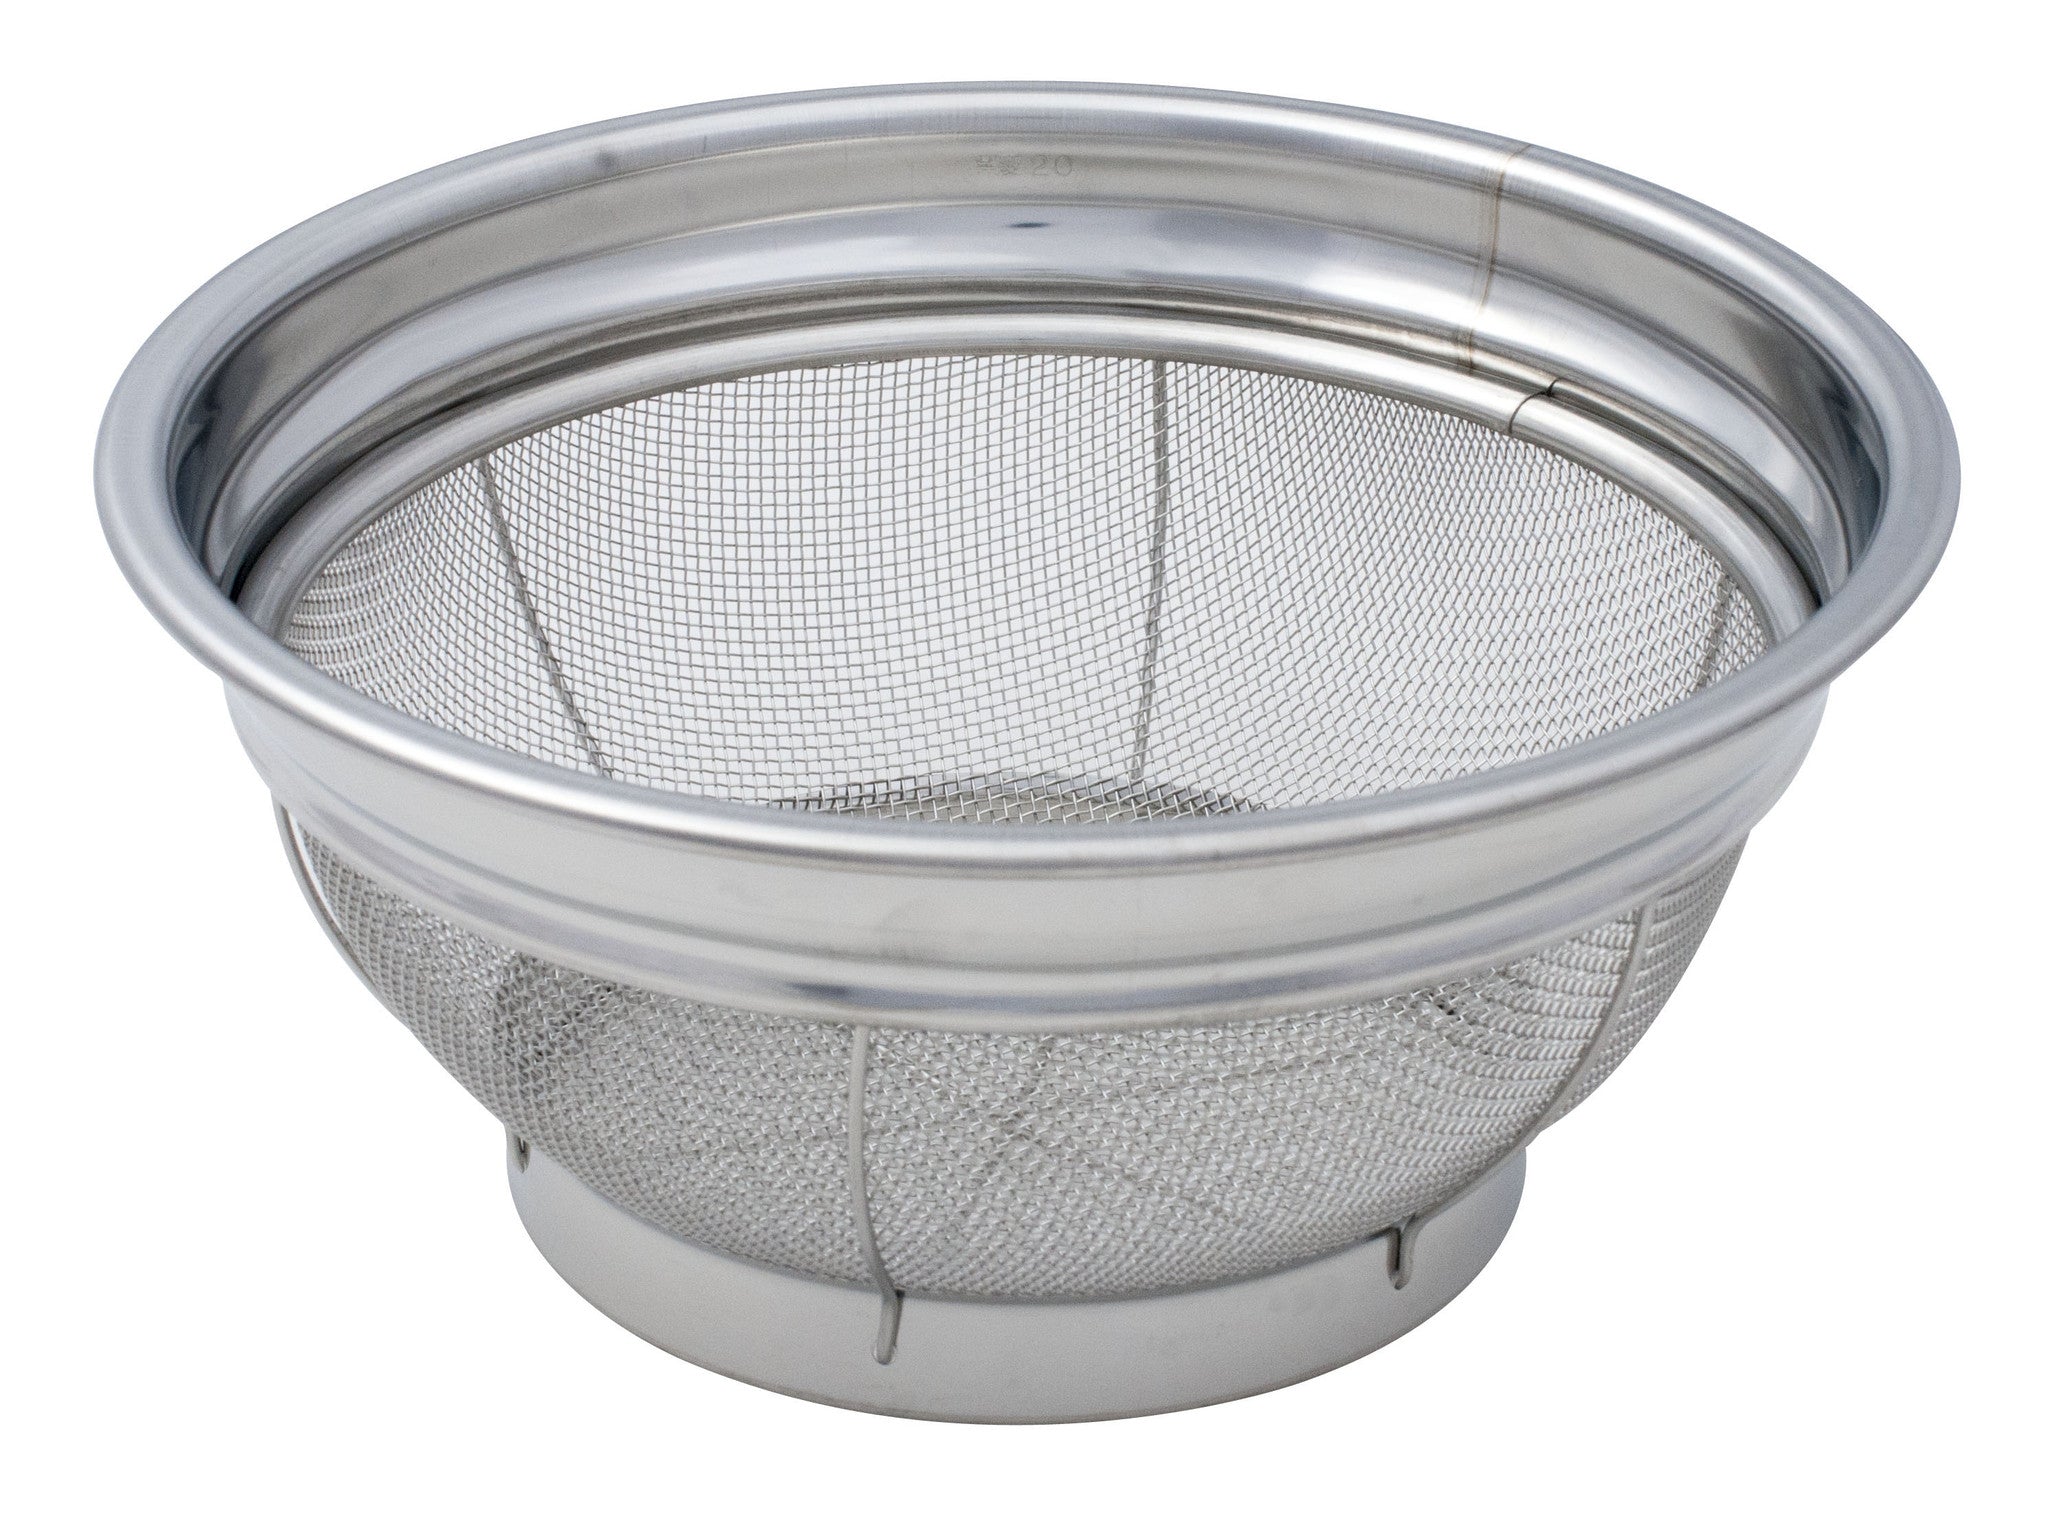 basket strainer for double kitchen sink